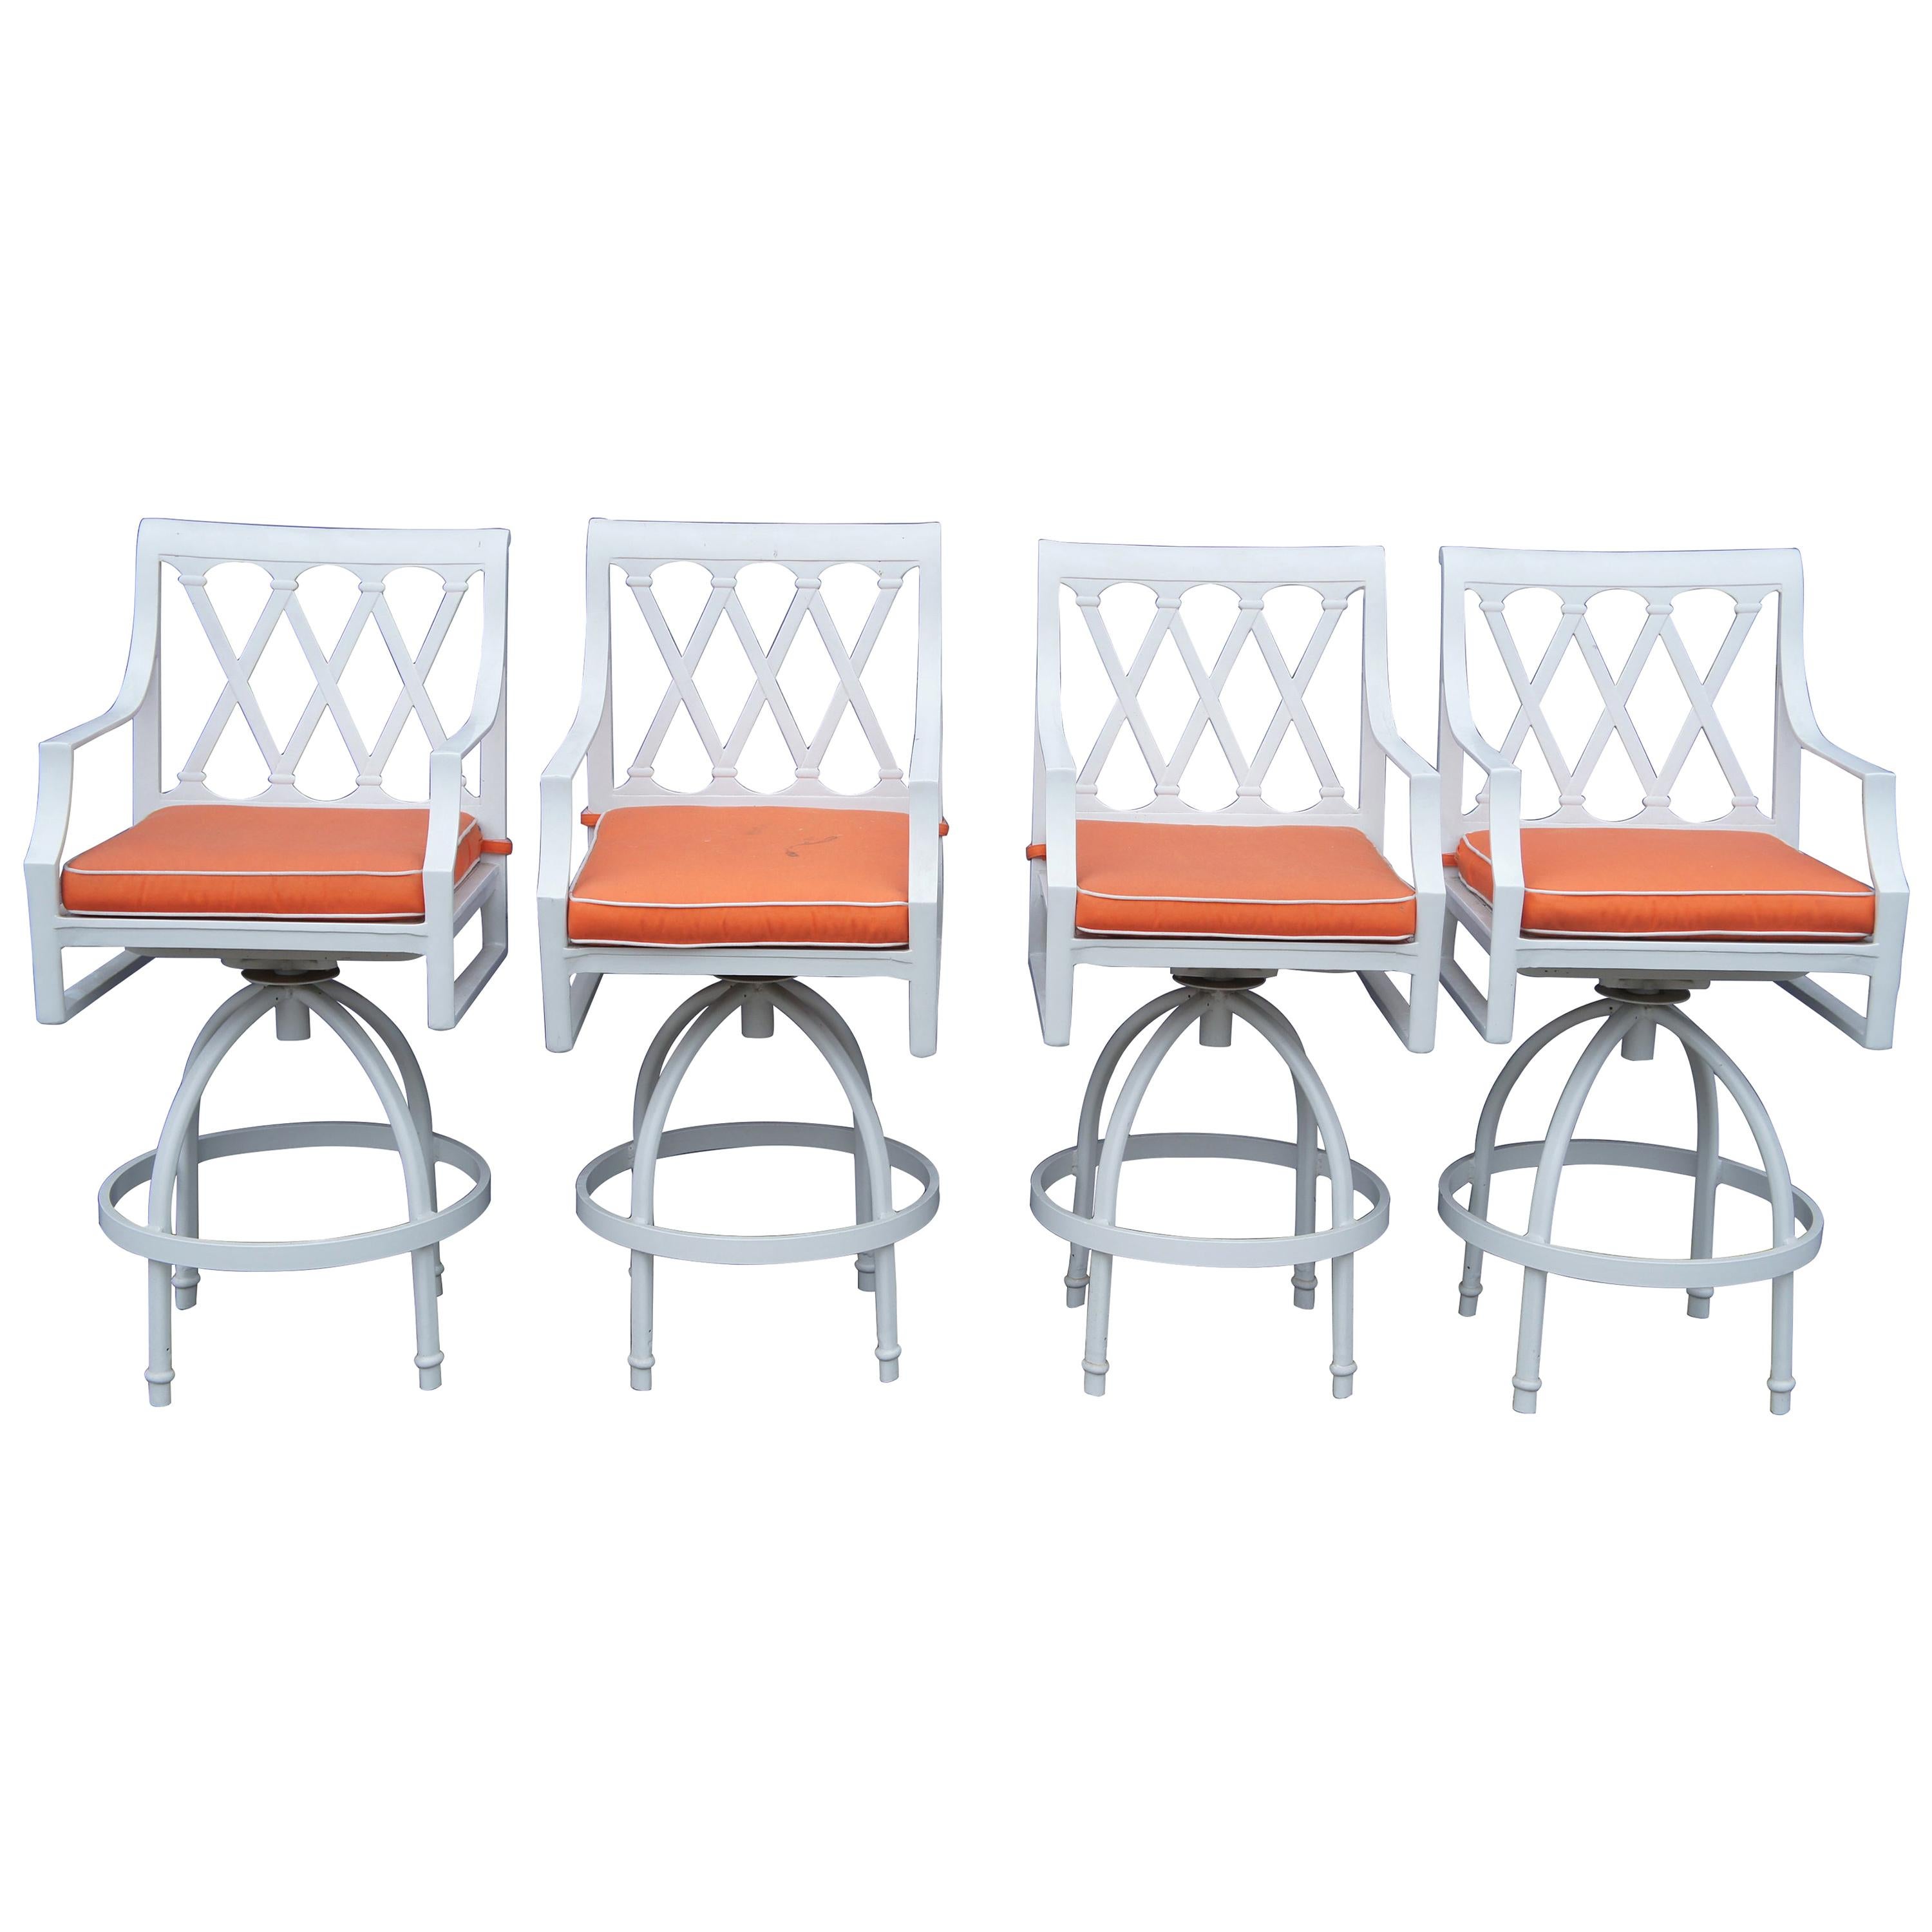 2 Frontgate Grayson Swivel Bar Stools White Aluminum Lattice Design Orange Seat